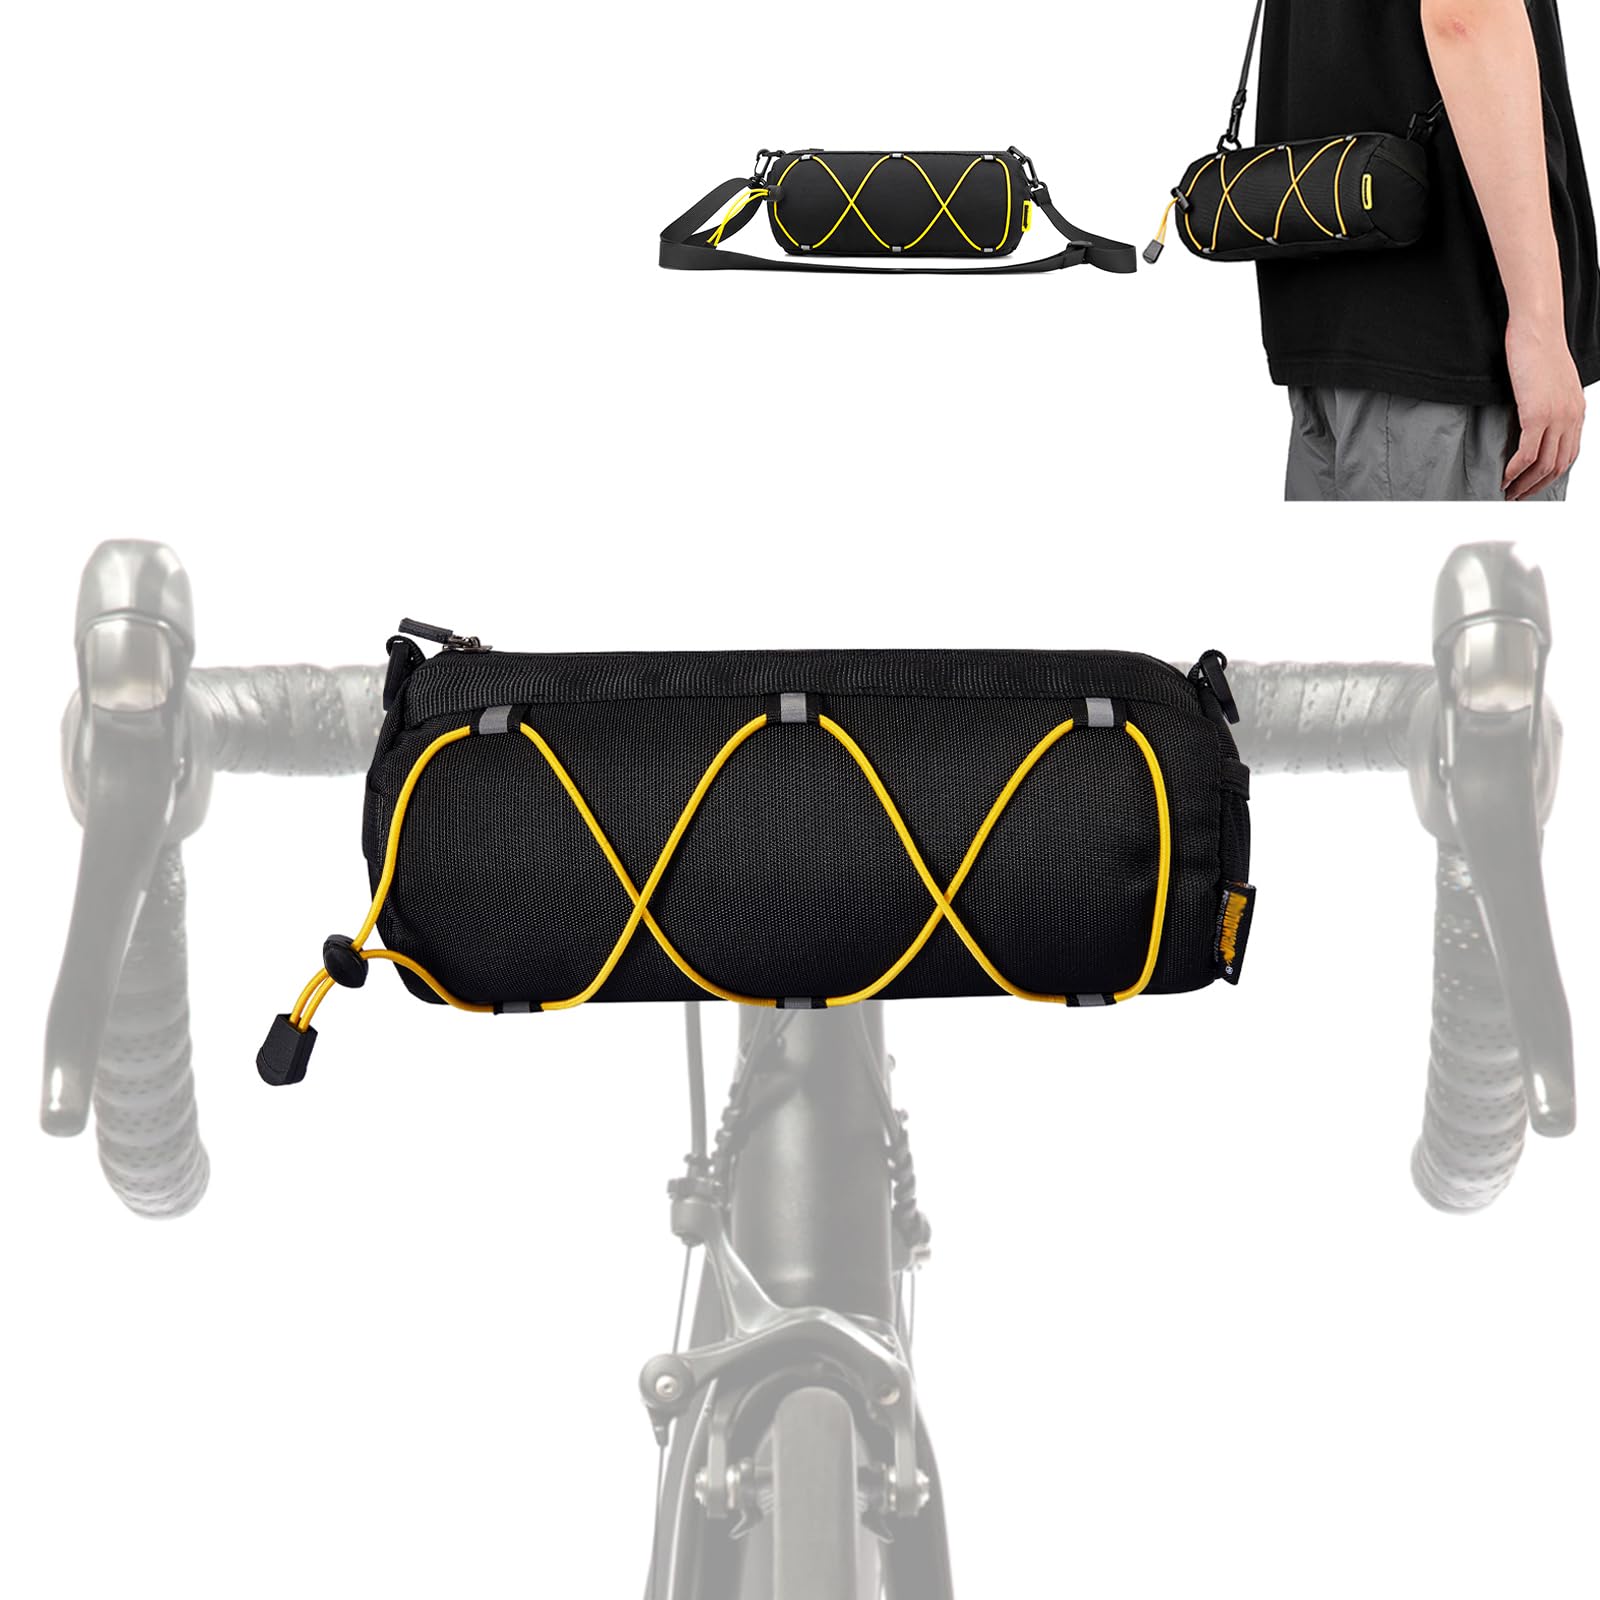 JOLY FANG Lenkertasche Fahrrad, 2 in1 Fahrradtasche Lenker mit Schultergurt - geeignet als Lenkertasche, Umhängetasche (Schwarz) von JOLY FANG